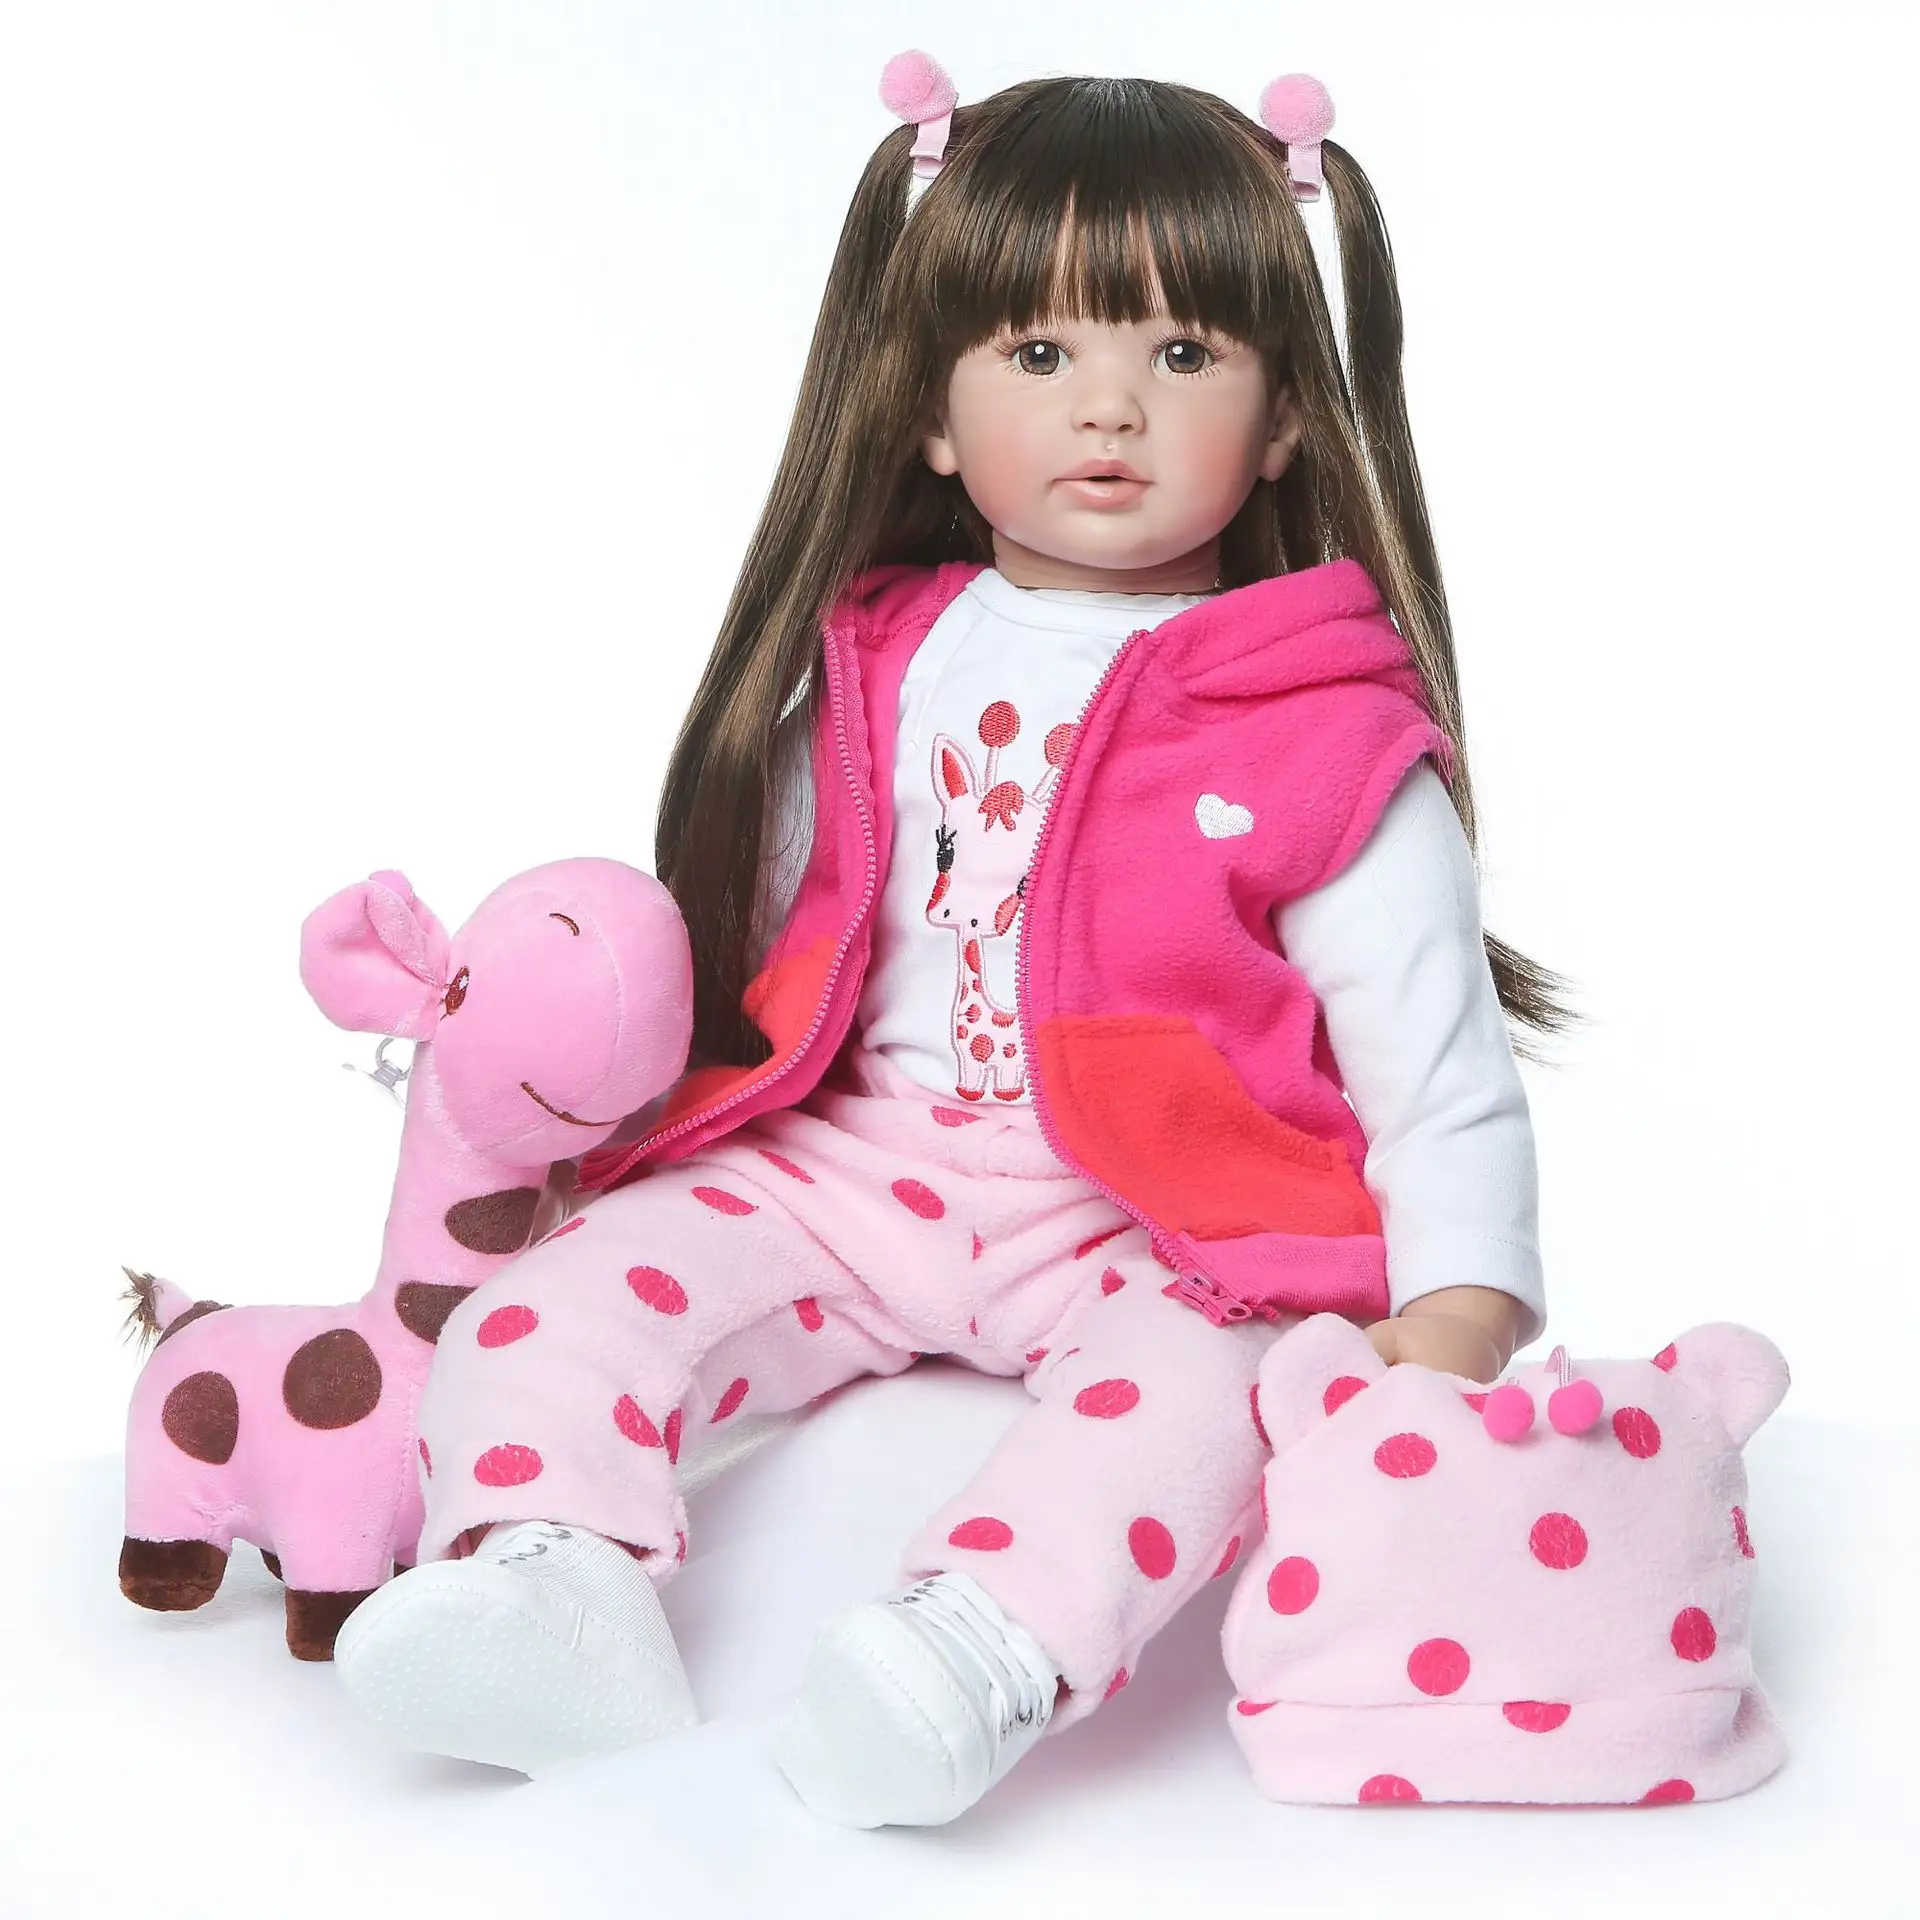 Lifereborn 24 ''Reborn Toddler Dolls Soft Vinyl Silicone Reborn Baby Dolls avec Mini animaux en peluche à vendre